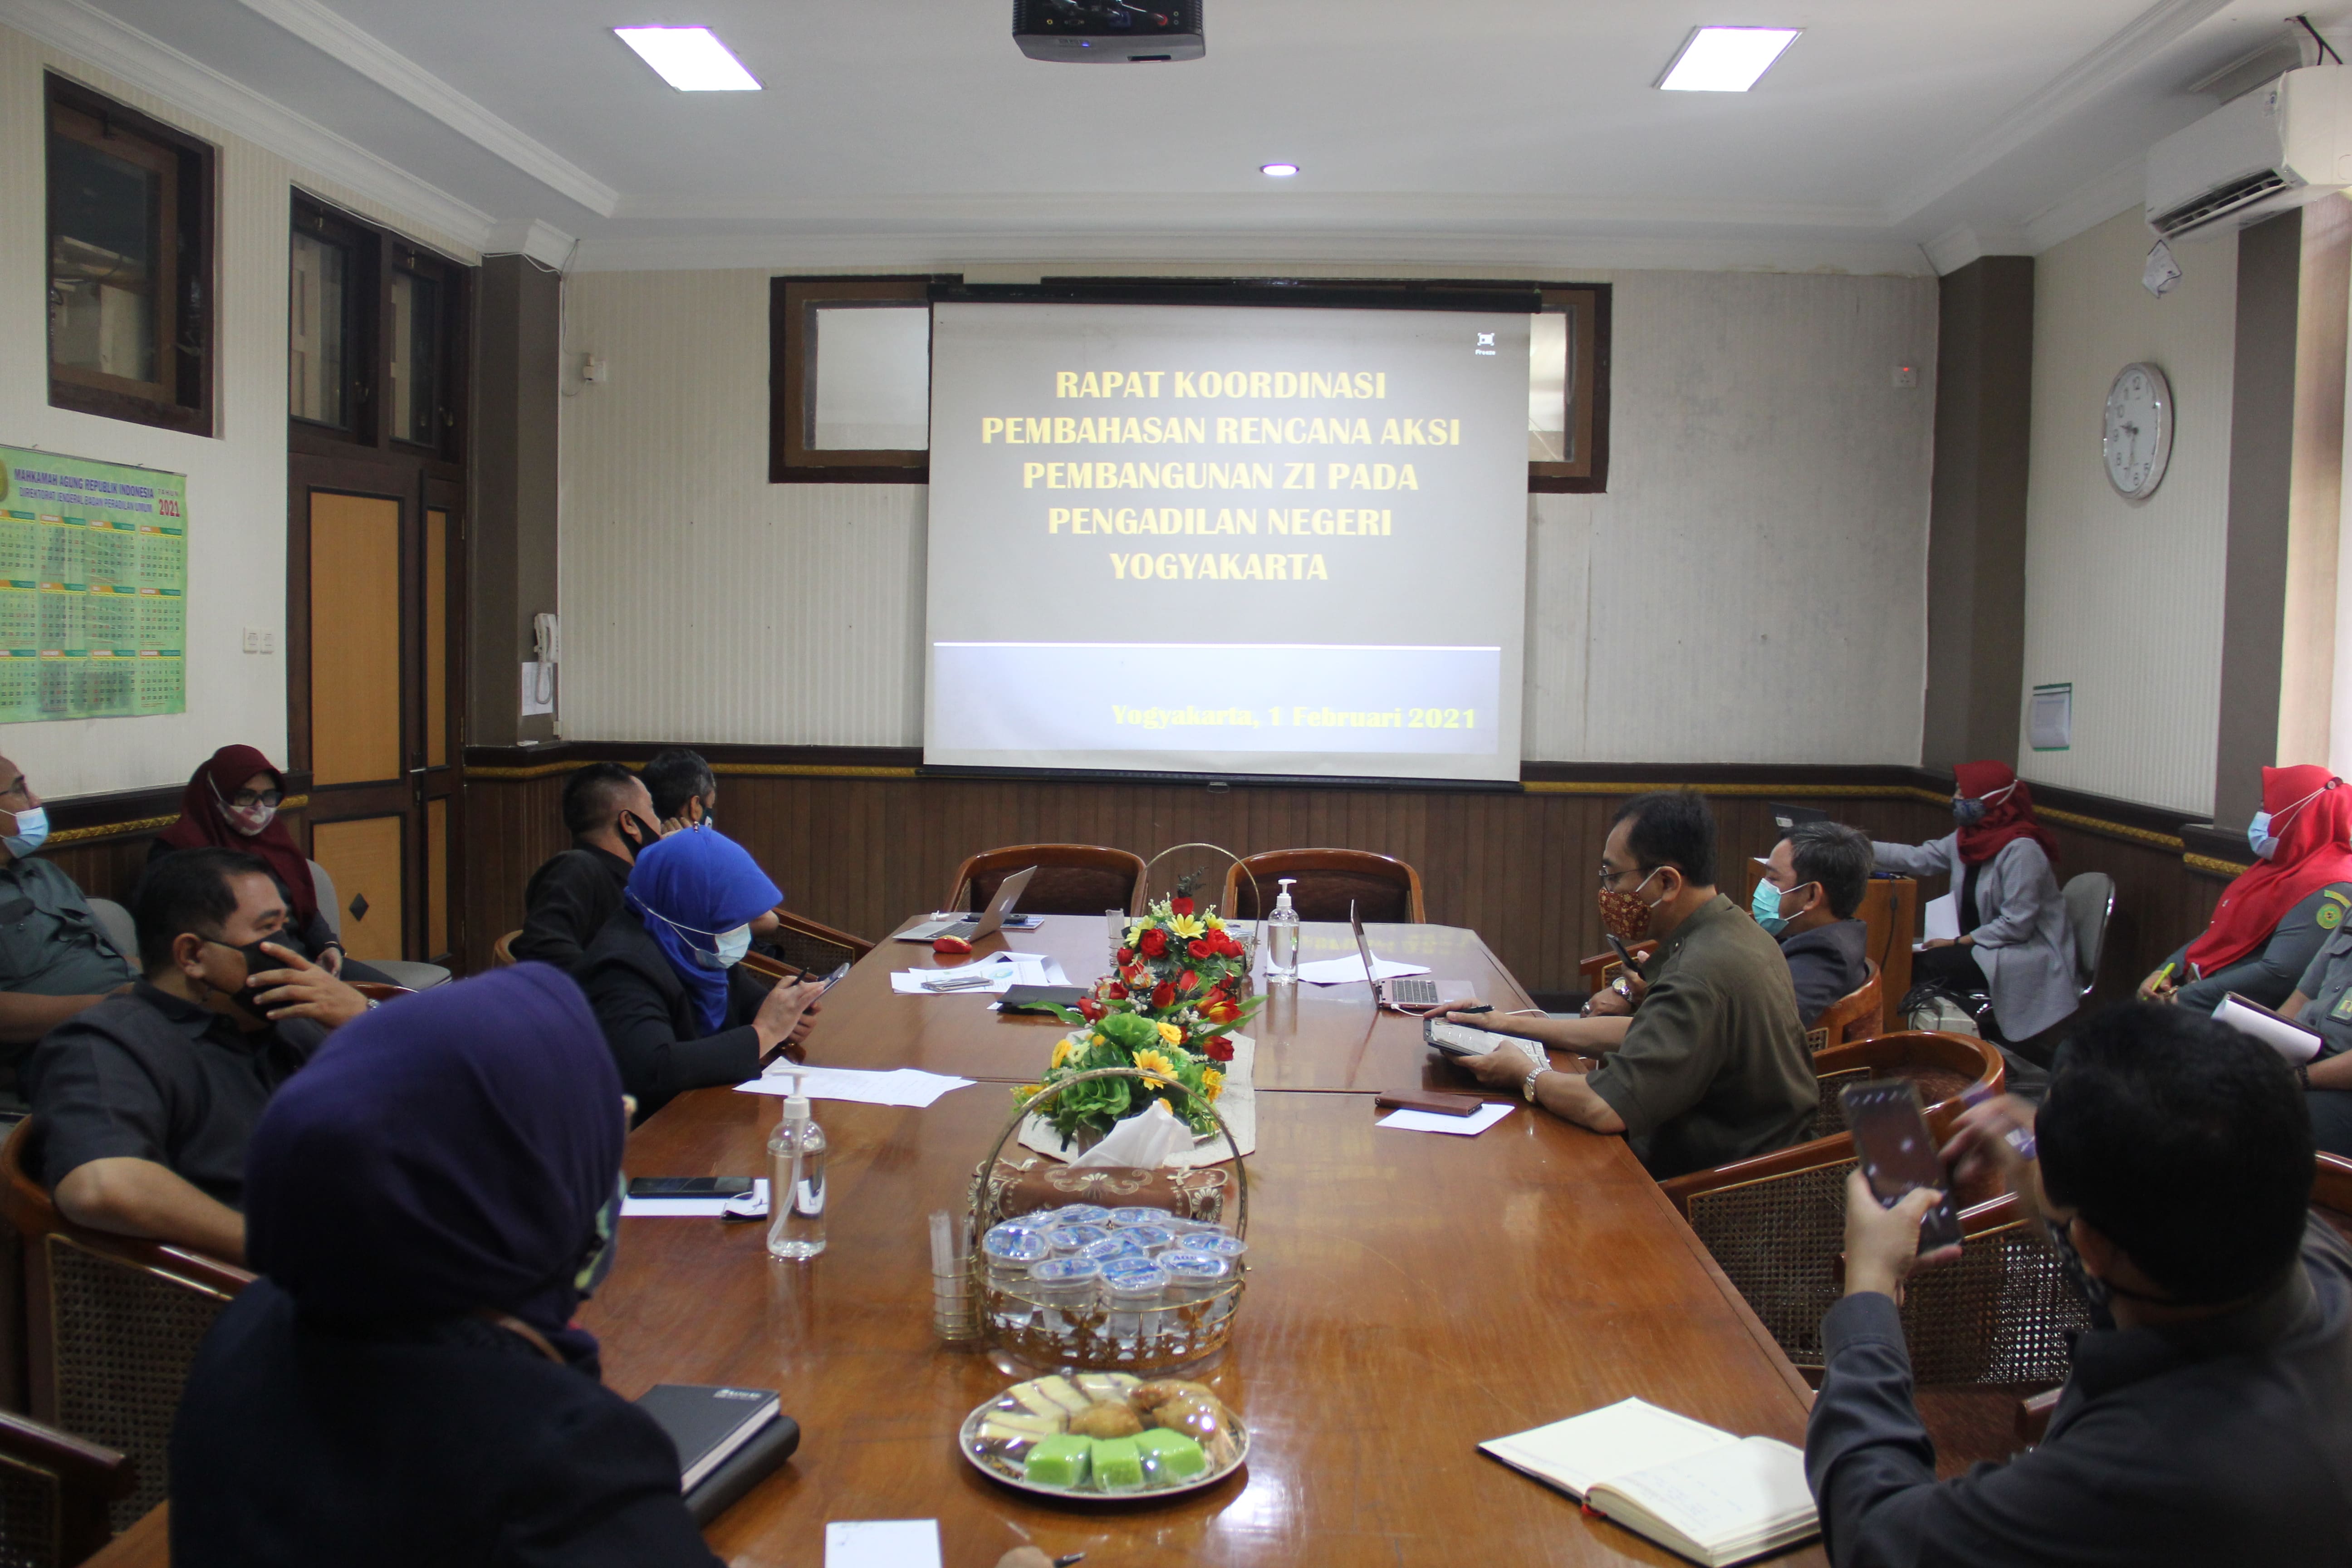 Rapat Koordinasi Rencana Aksi Pembangunan Zona Integritas Menuju Wilayah Birokrasi Bersih Melayani Pengadilan Negeri Yogyakarta